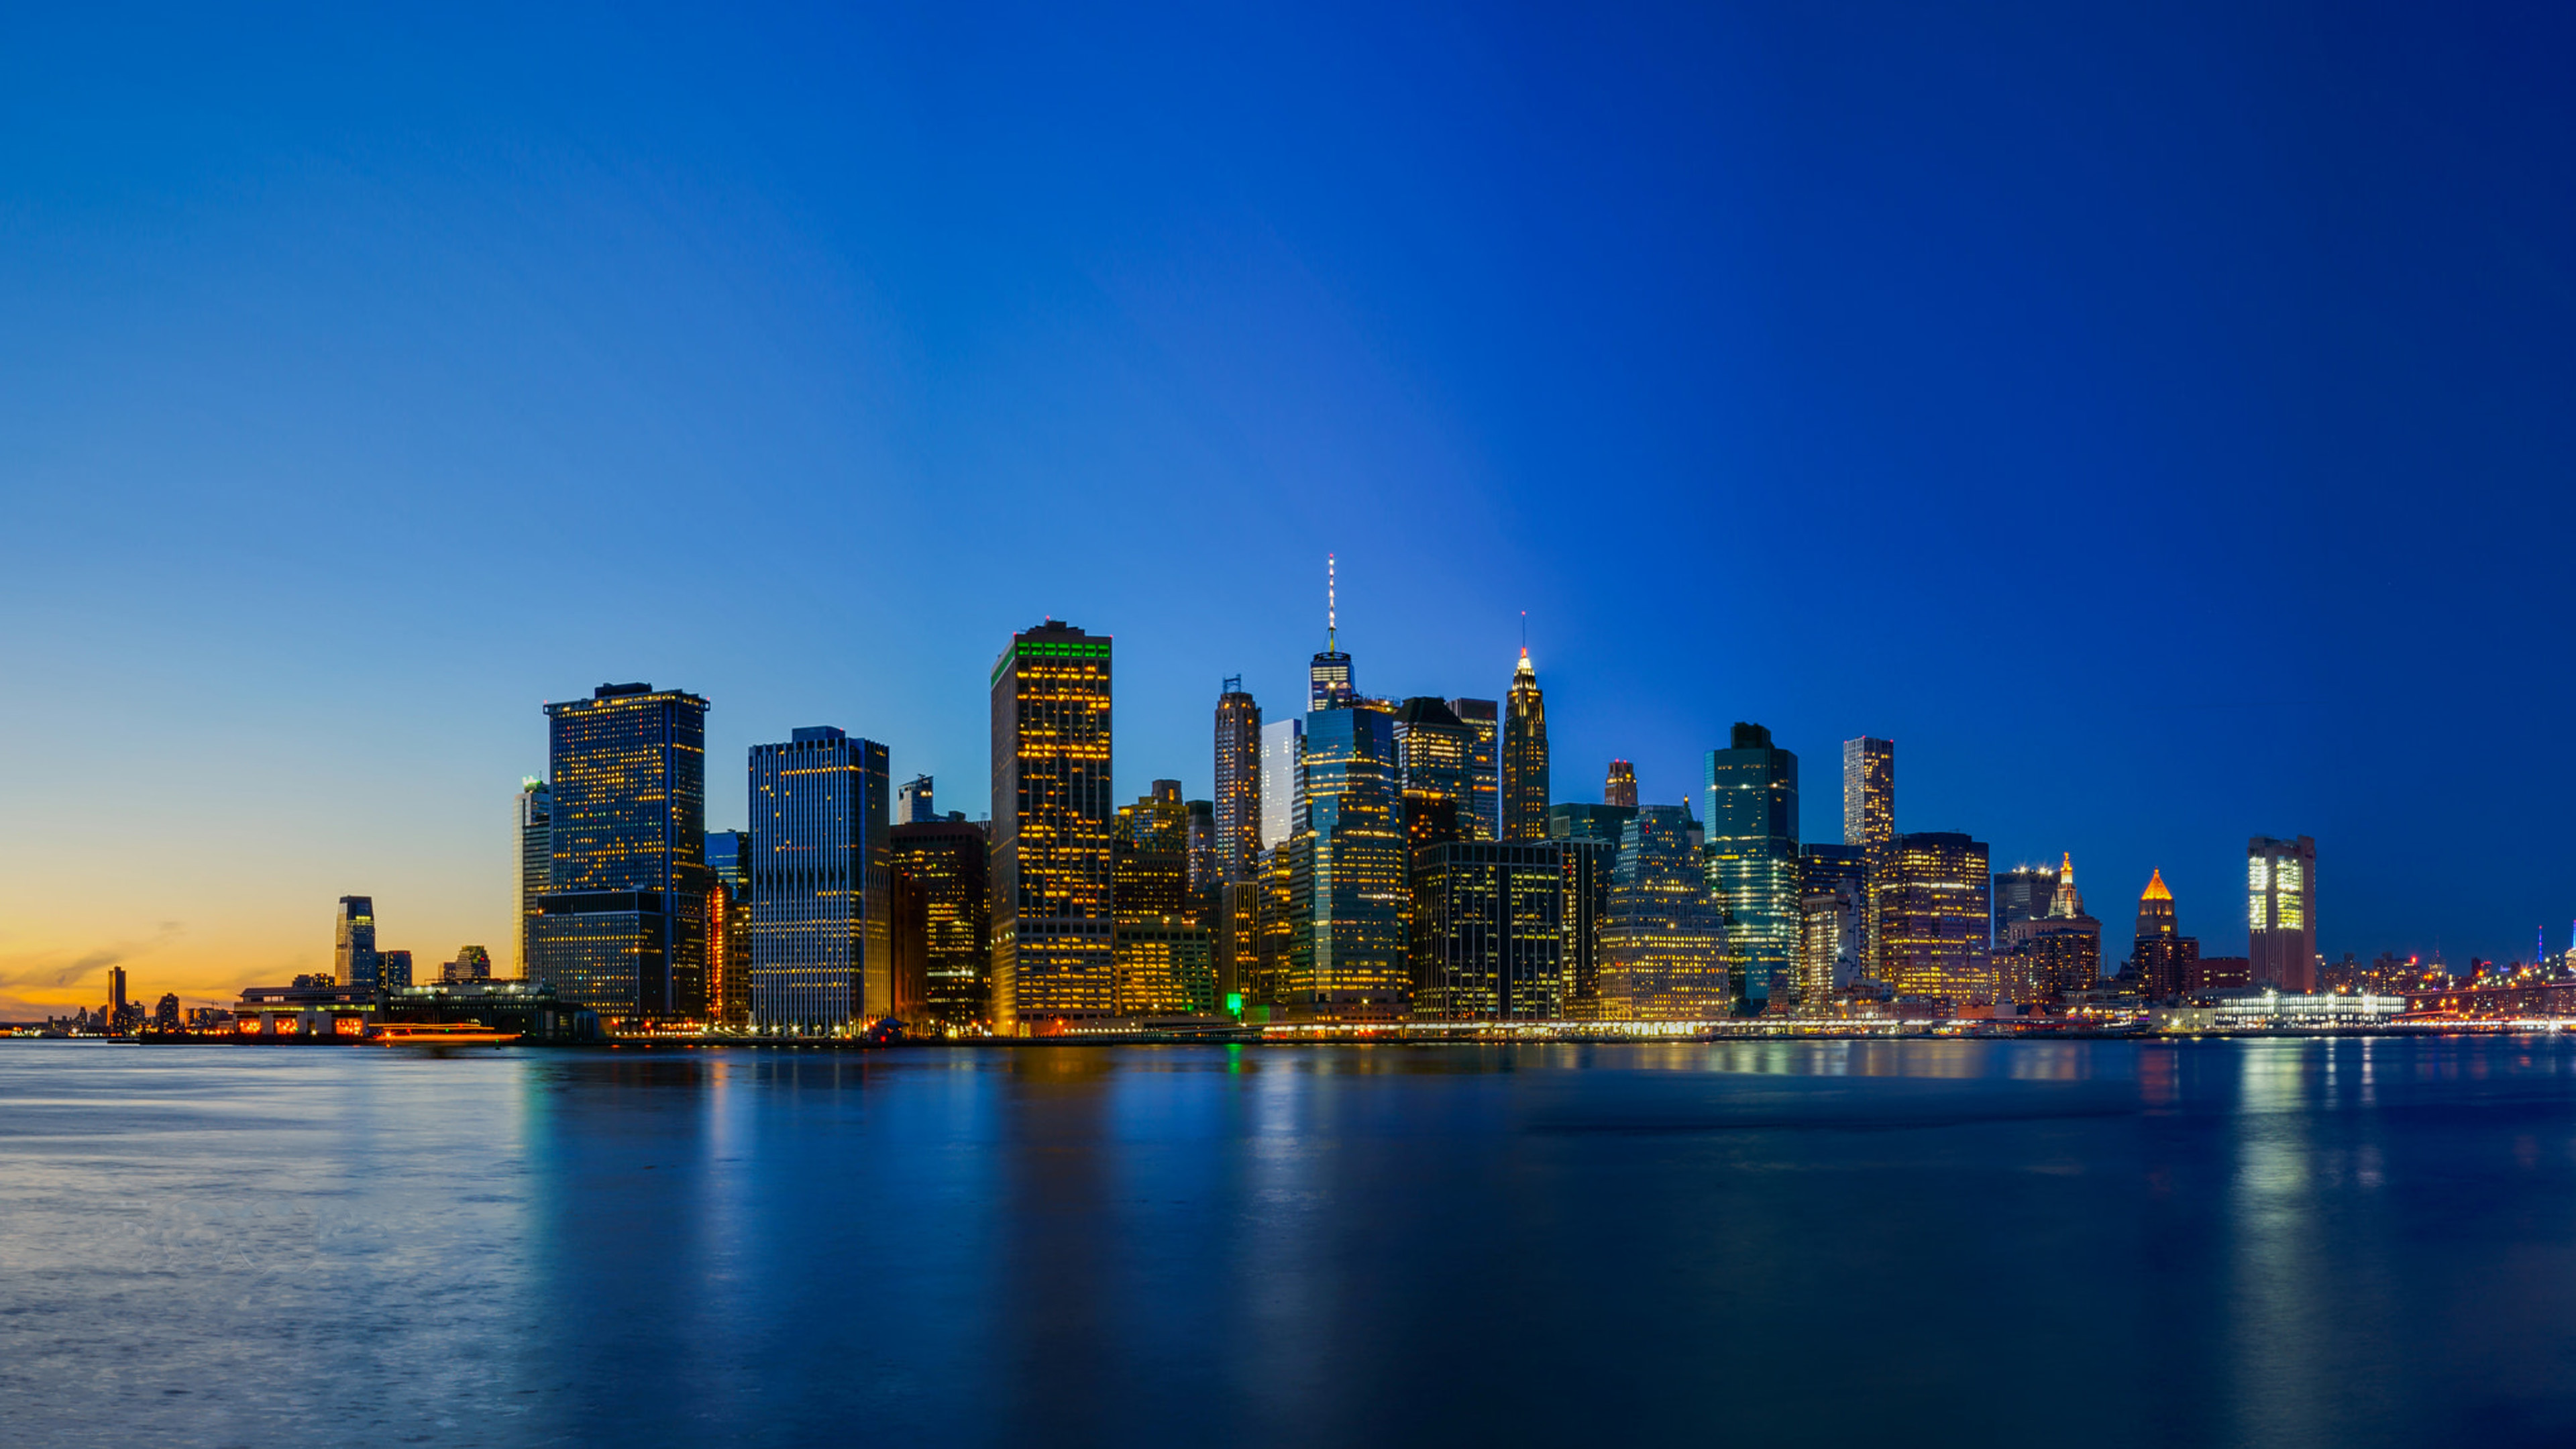 Brooklyn Bridge Park New York City Skyline Best Hd Wallpapers For Desktop  Tablets And Mobile Phones 3840x2160 : 